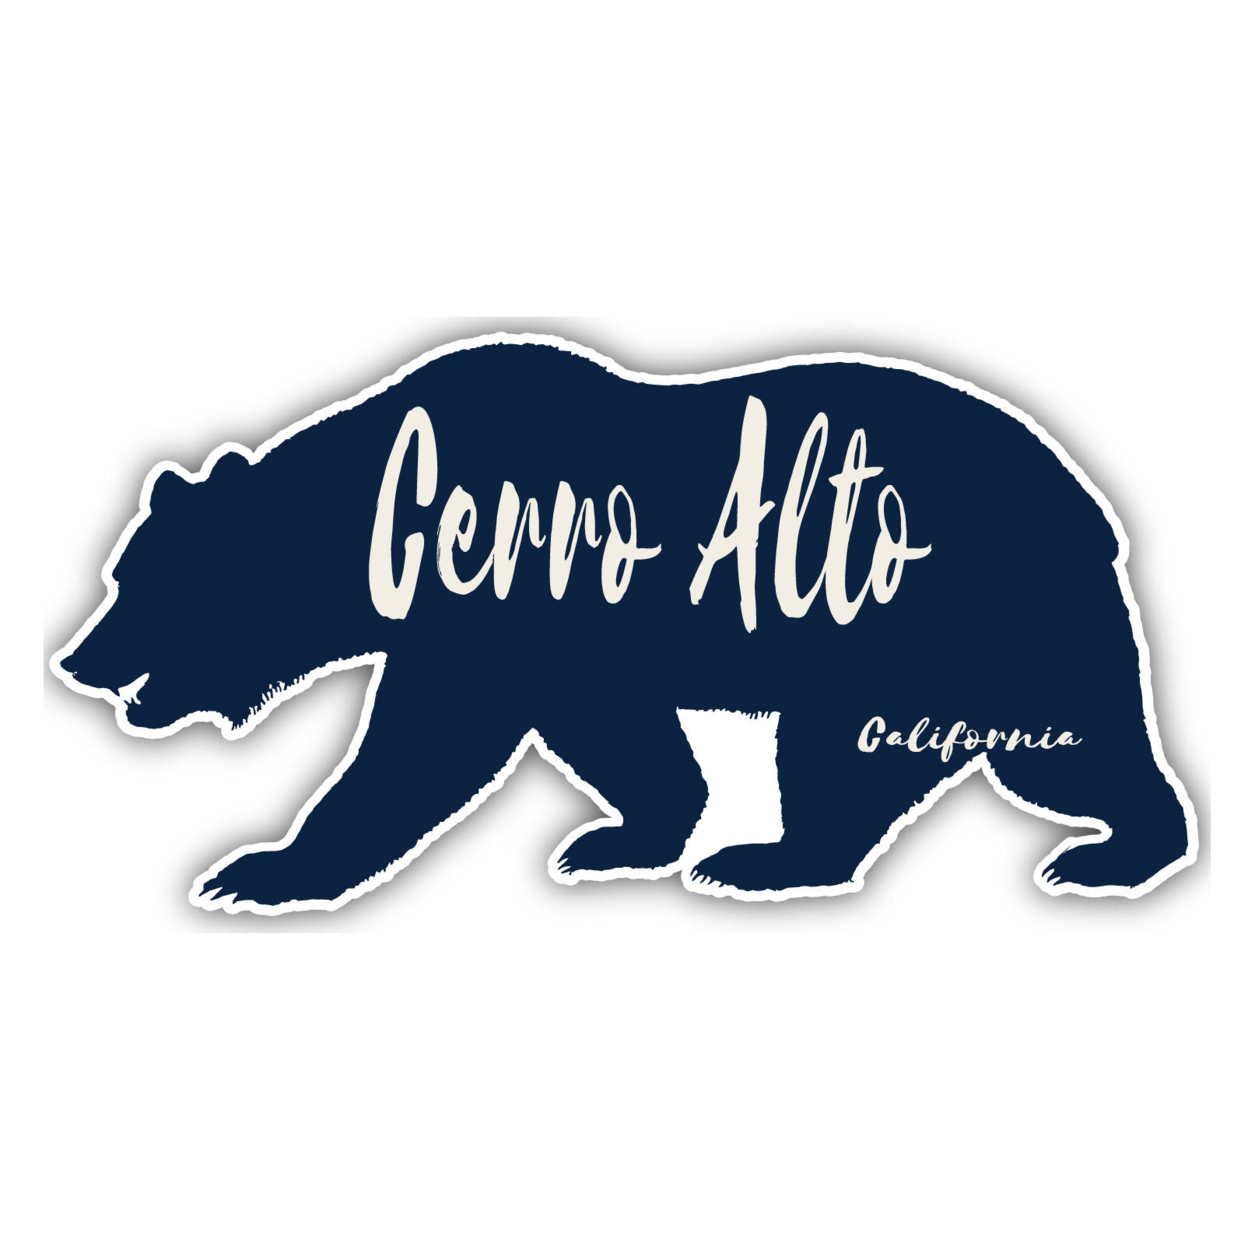 Cerro Alto California Souvenir Decorative Stickers (Choose Theme And Size) - 4-Pack, 4-Inch, Bear